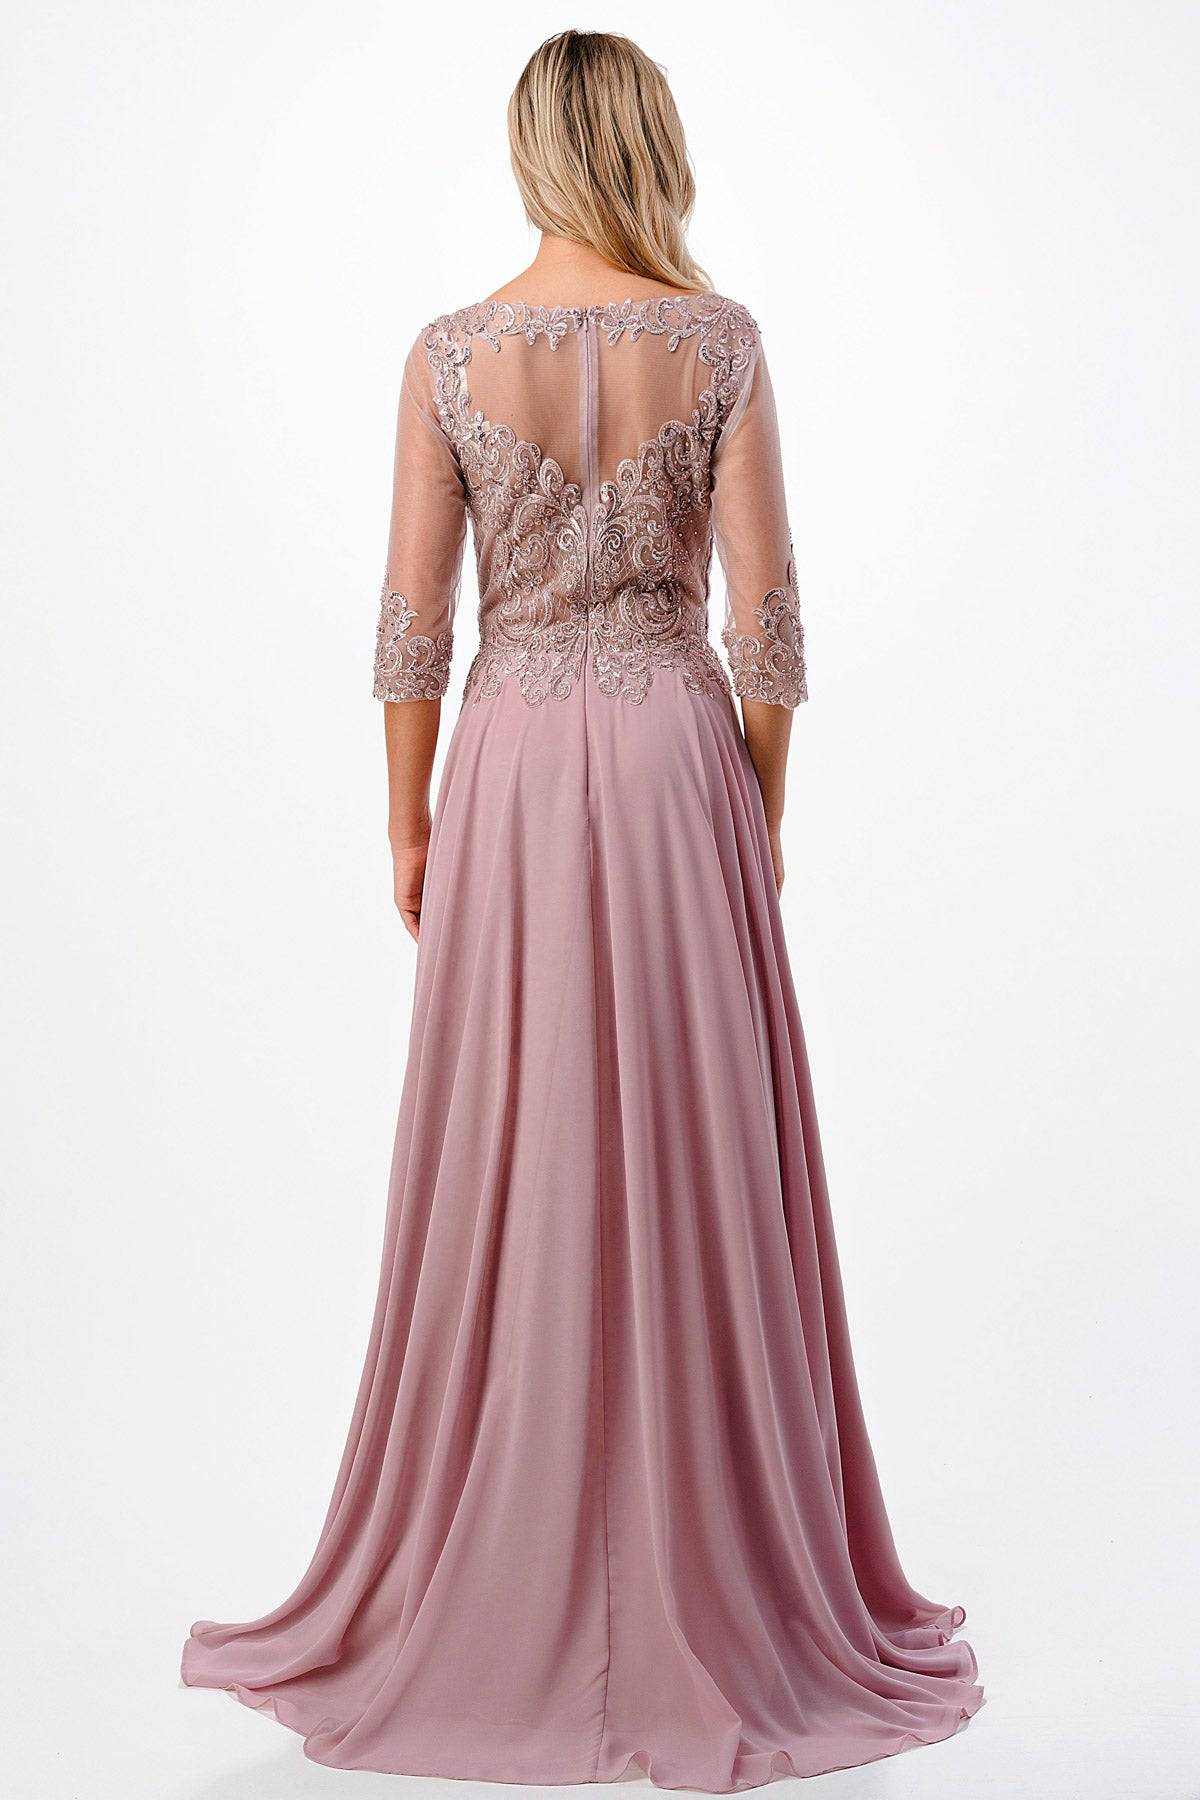 Aspeed M2722 Half Sleeve Lace & Sequin Chiffon Dress - NORMA REED